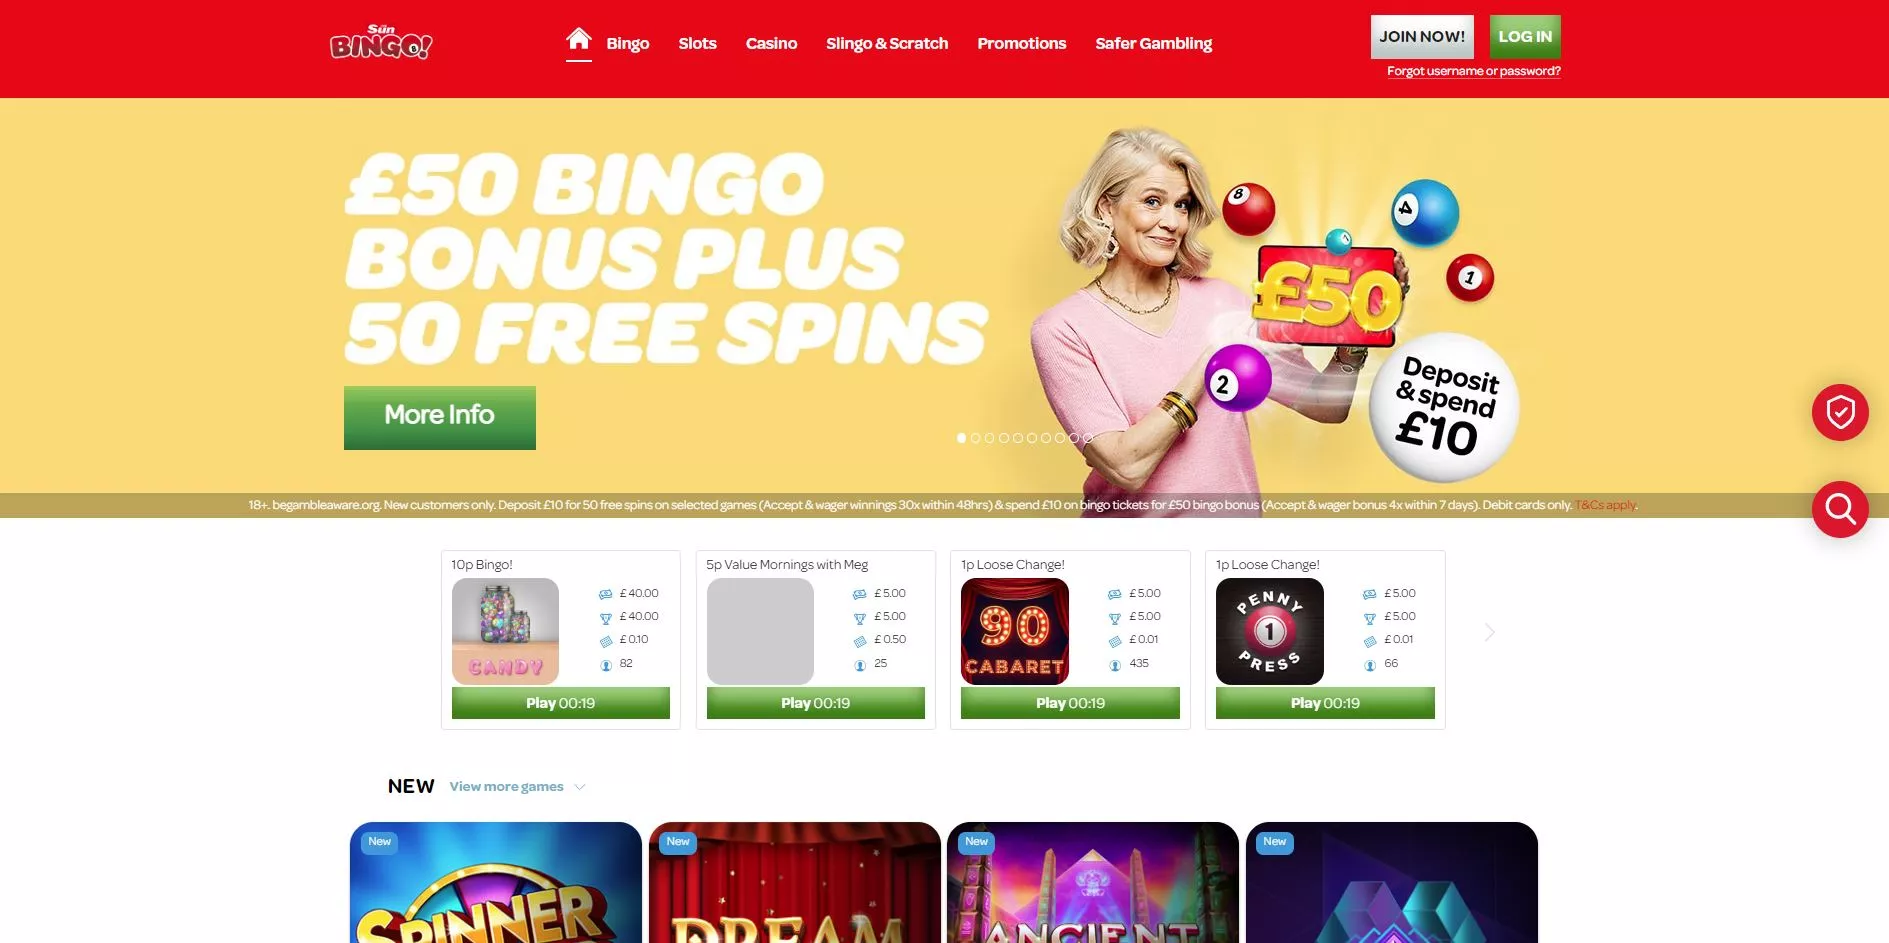 The homepage for Sun bingo